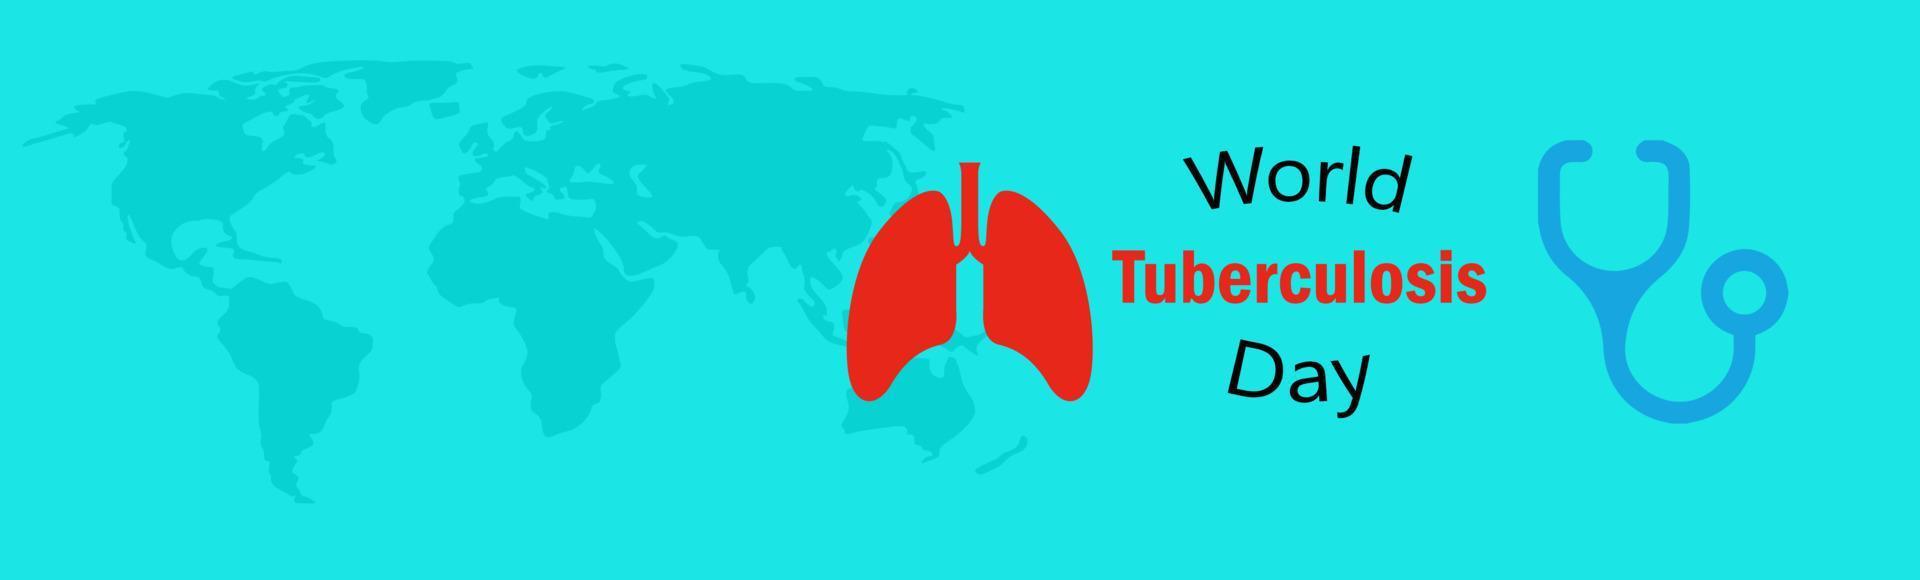 World Tuberculosis Day vector illustration.World Tuberculosis Day banner poster background